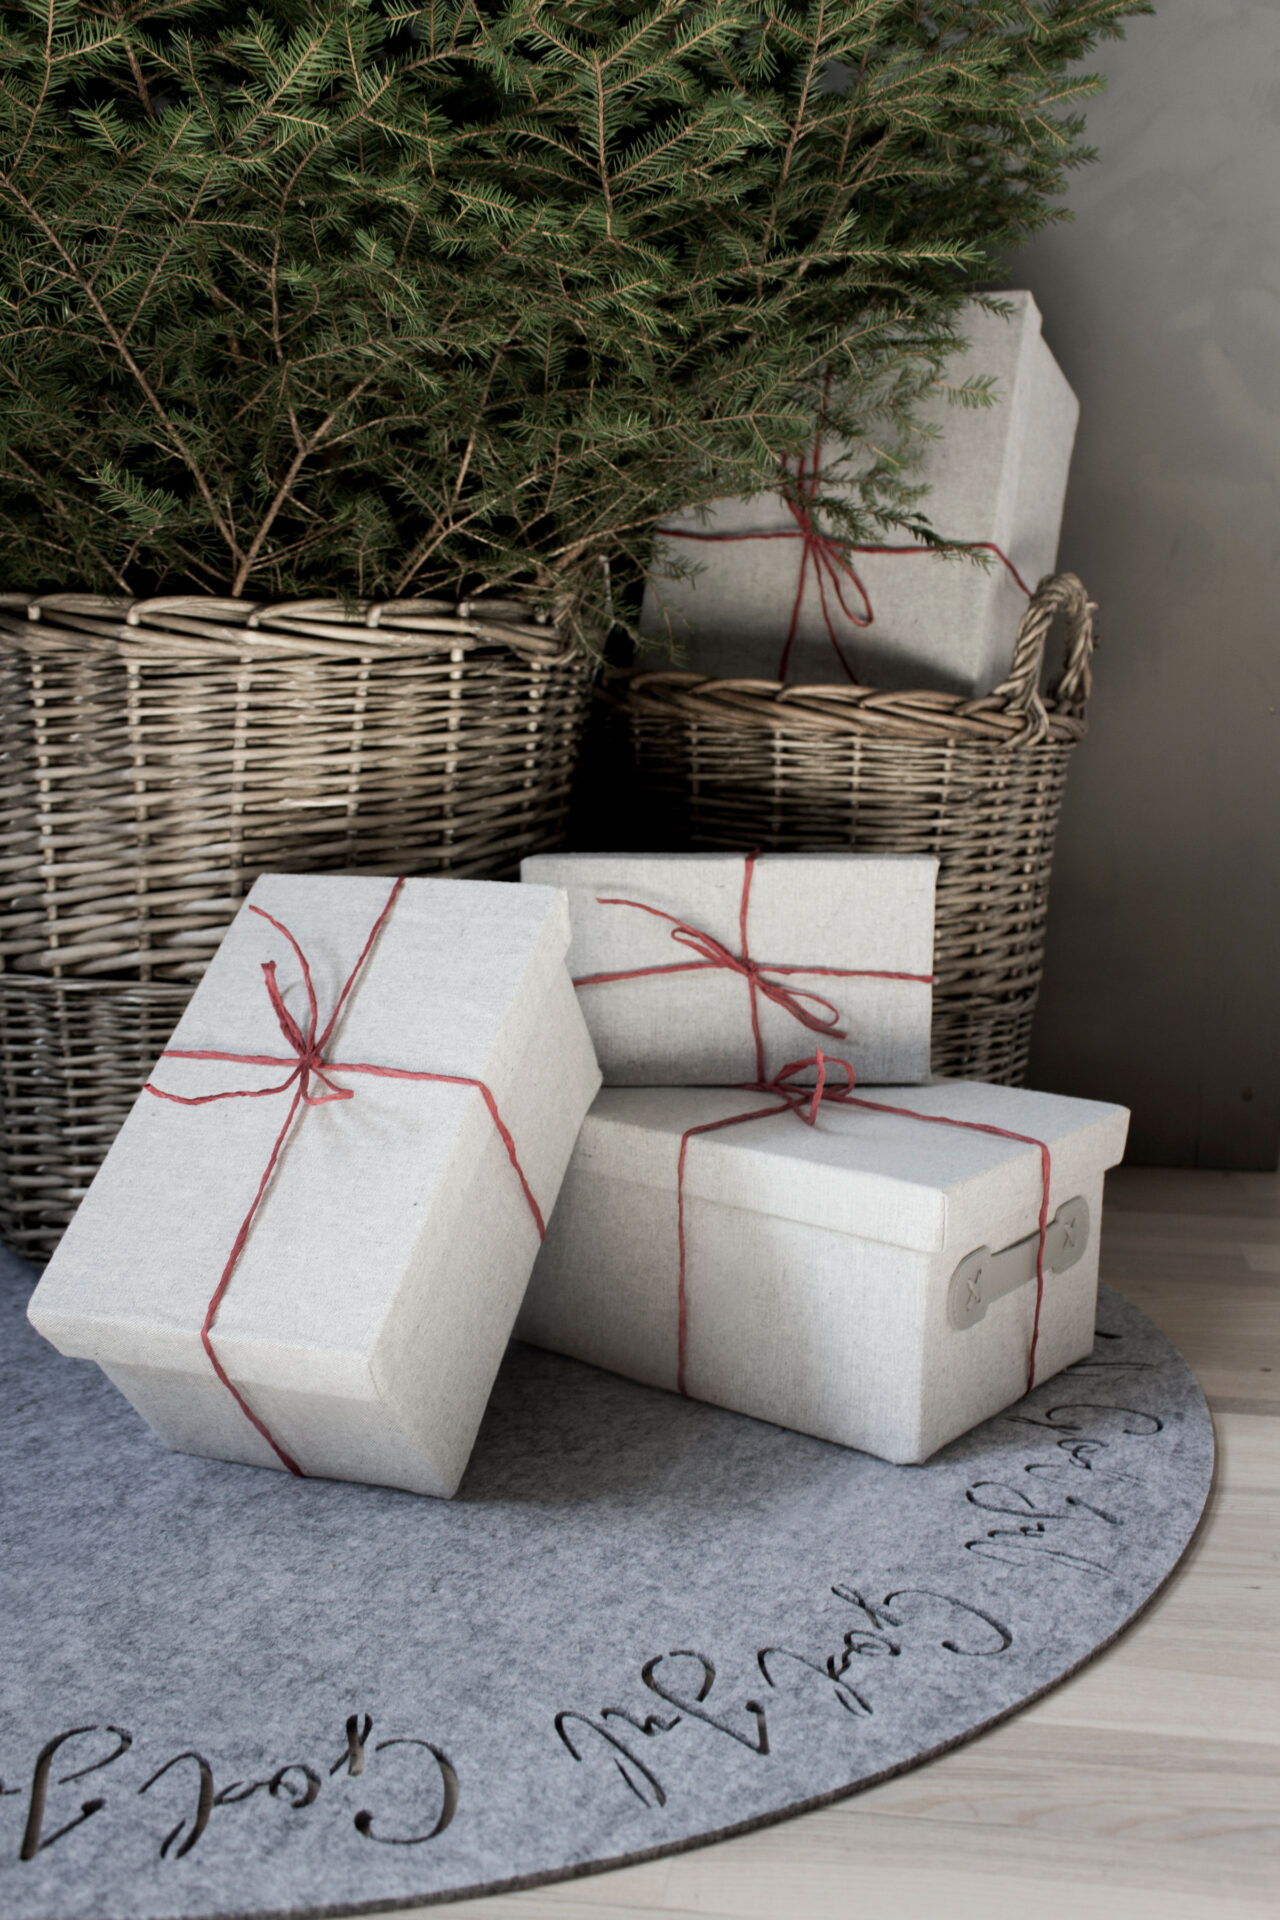 Featured image for “Öppet i jul & nyår”